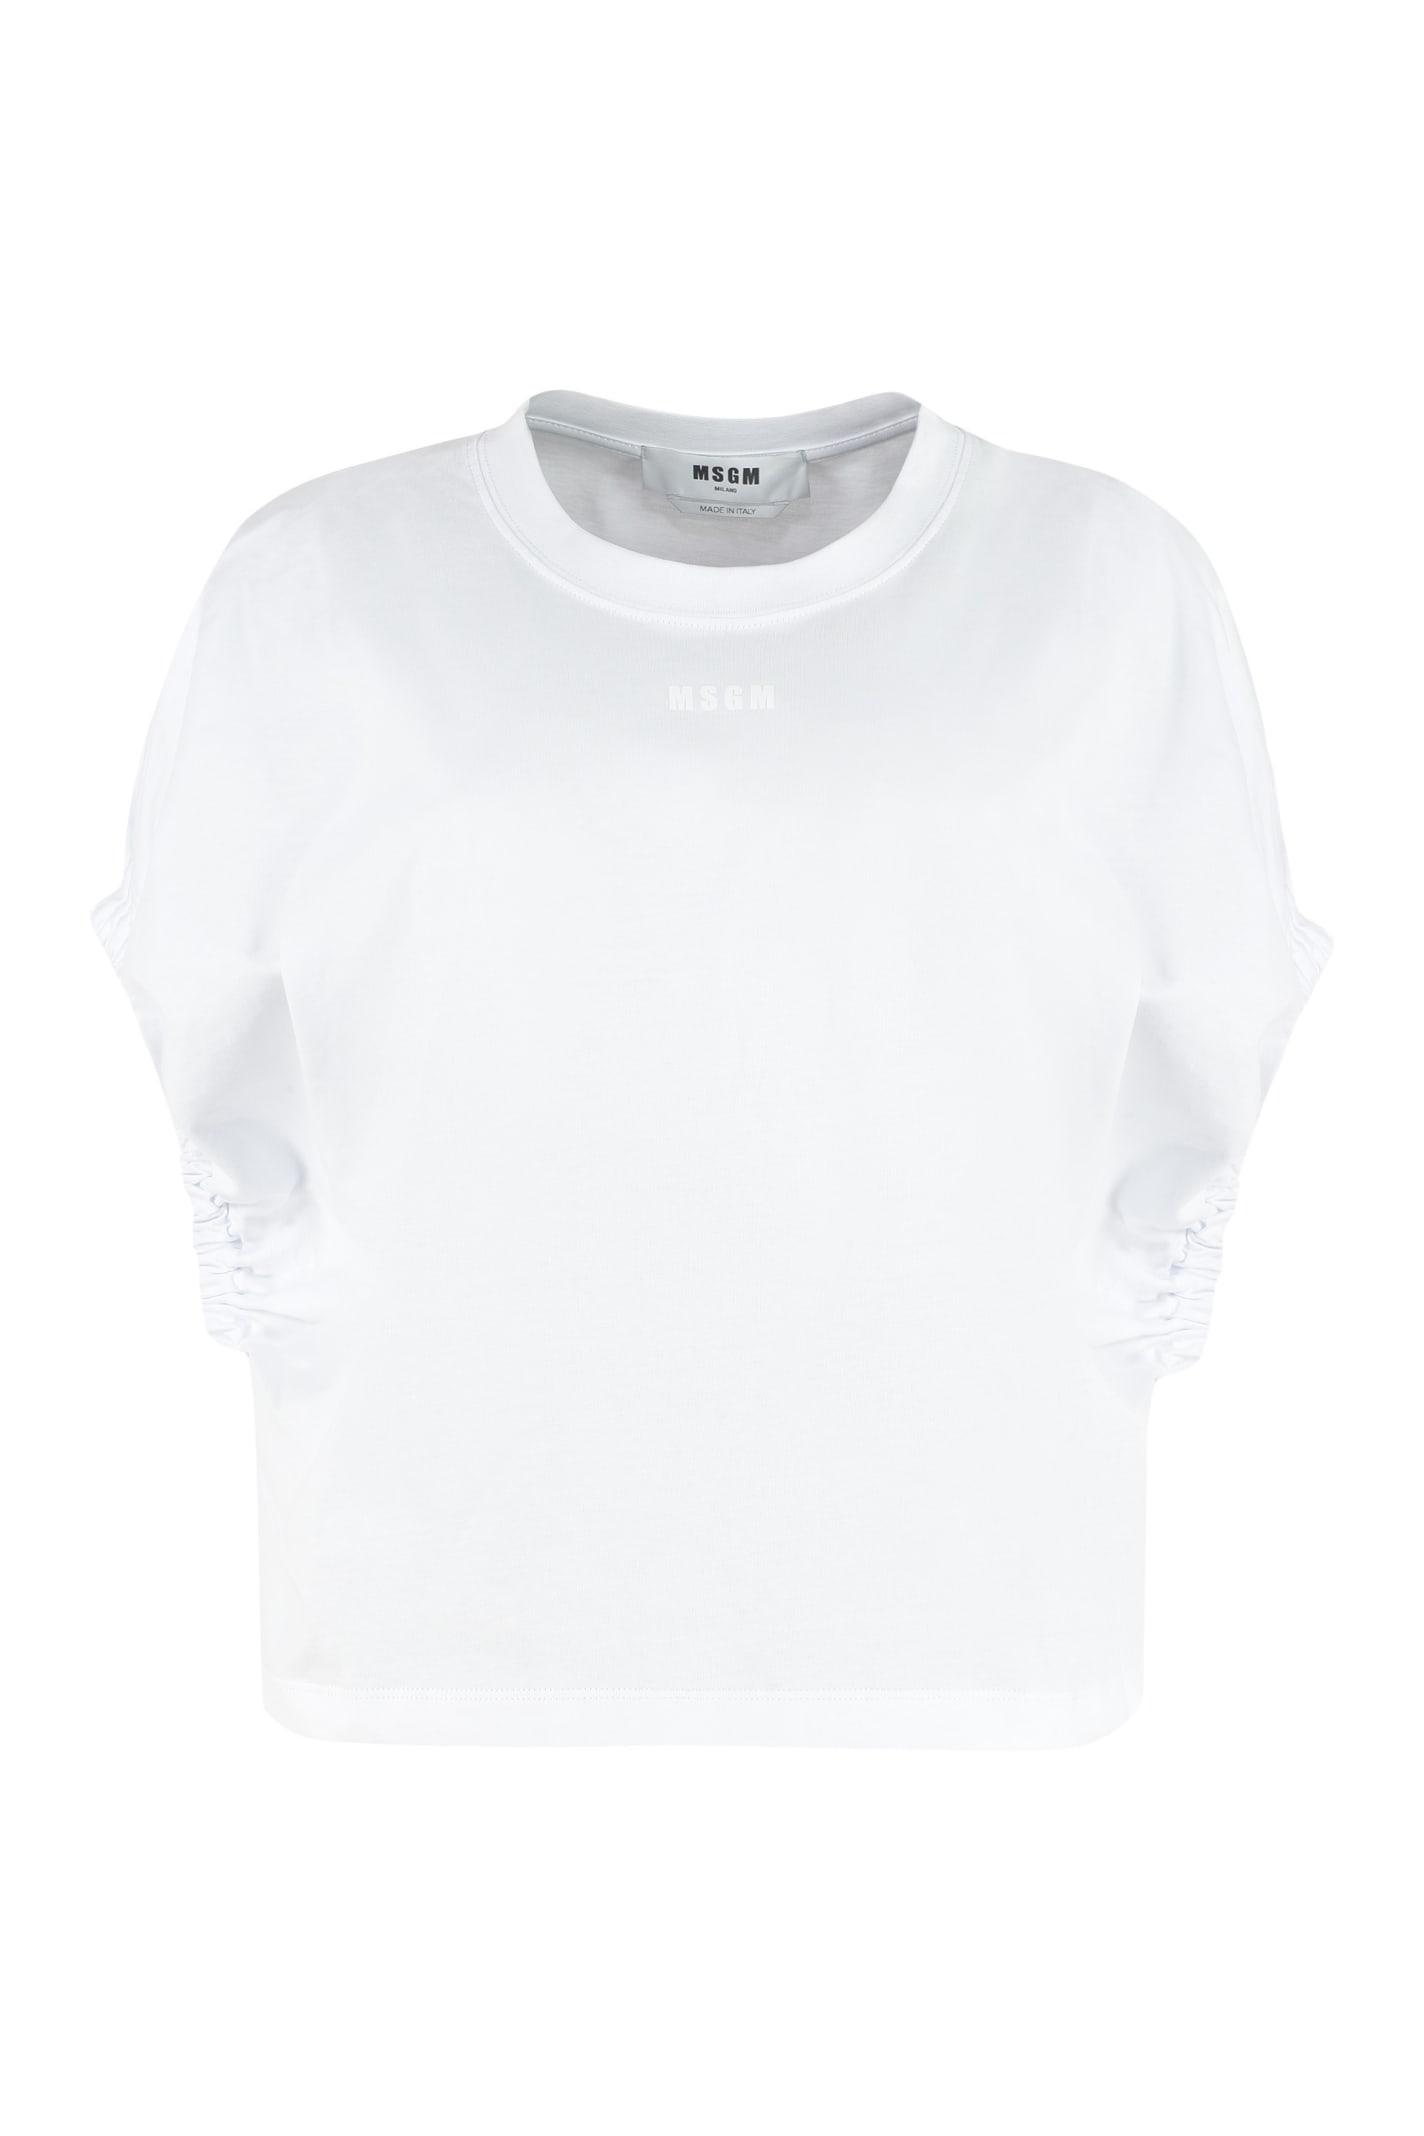 Msgm Cotton Crew-neck T-shirt In White